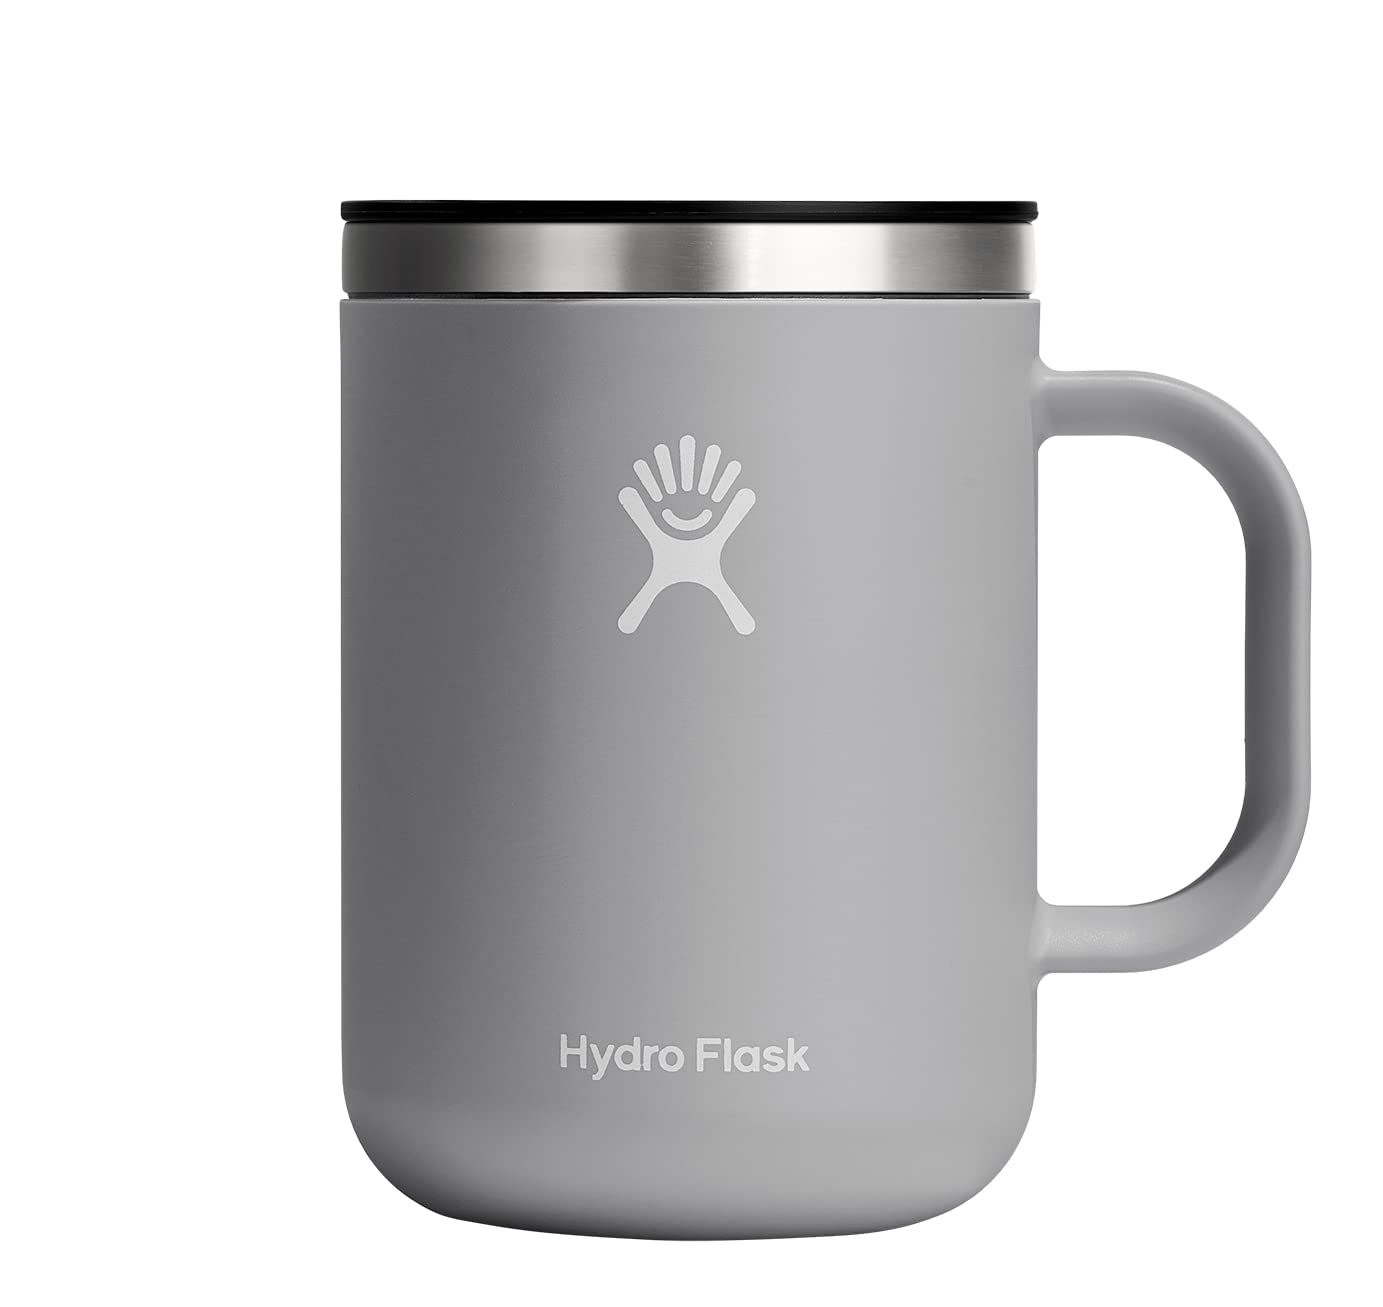 24-Oz Hydro Flask Mug (Birch) $18.73 Free Shipping w/ Prime